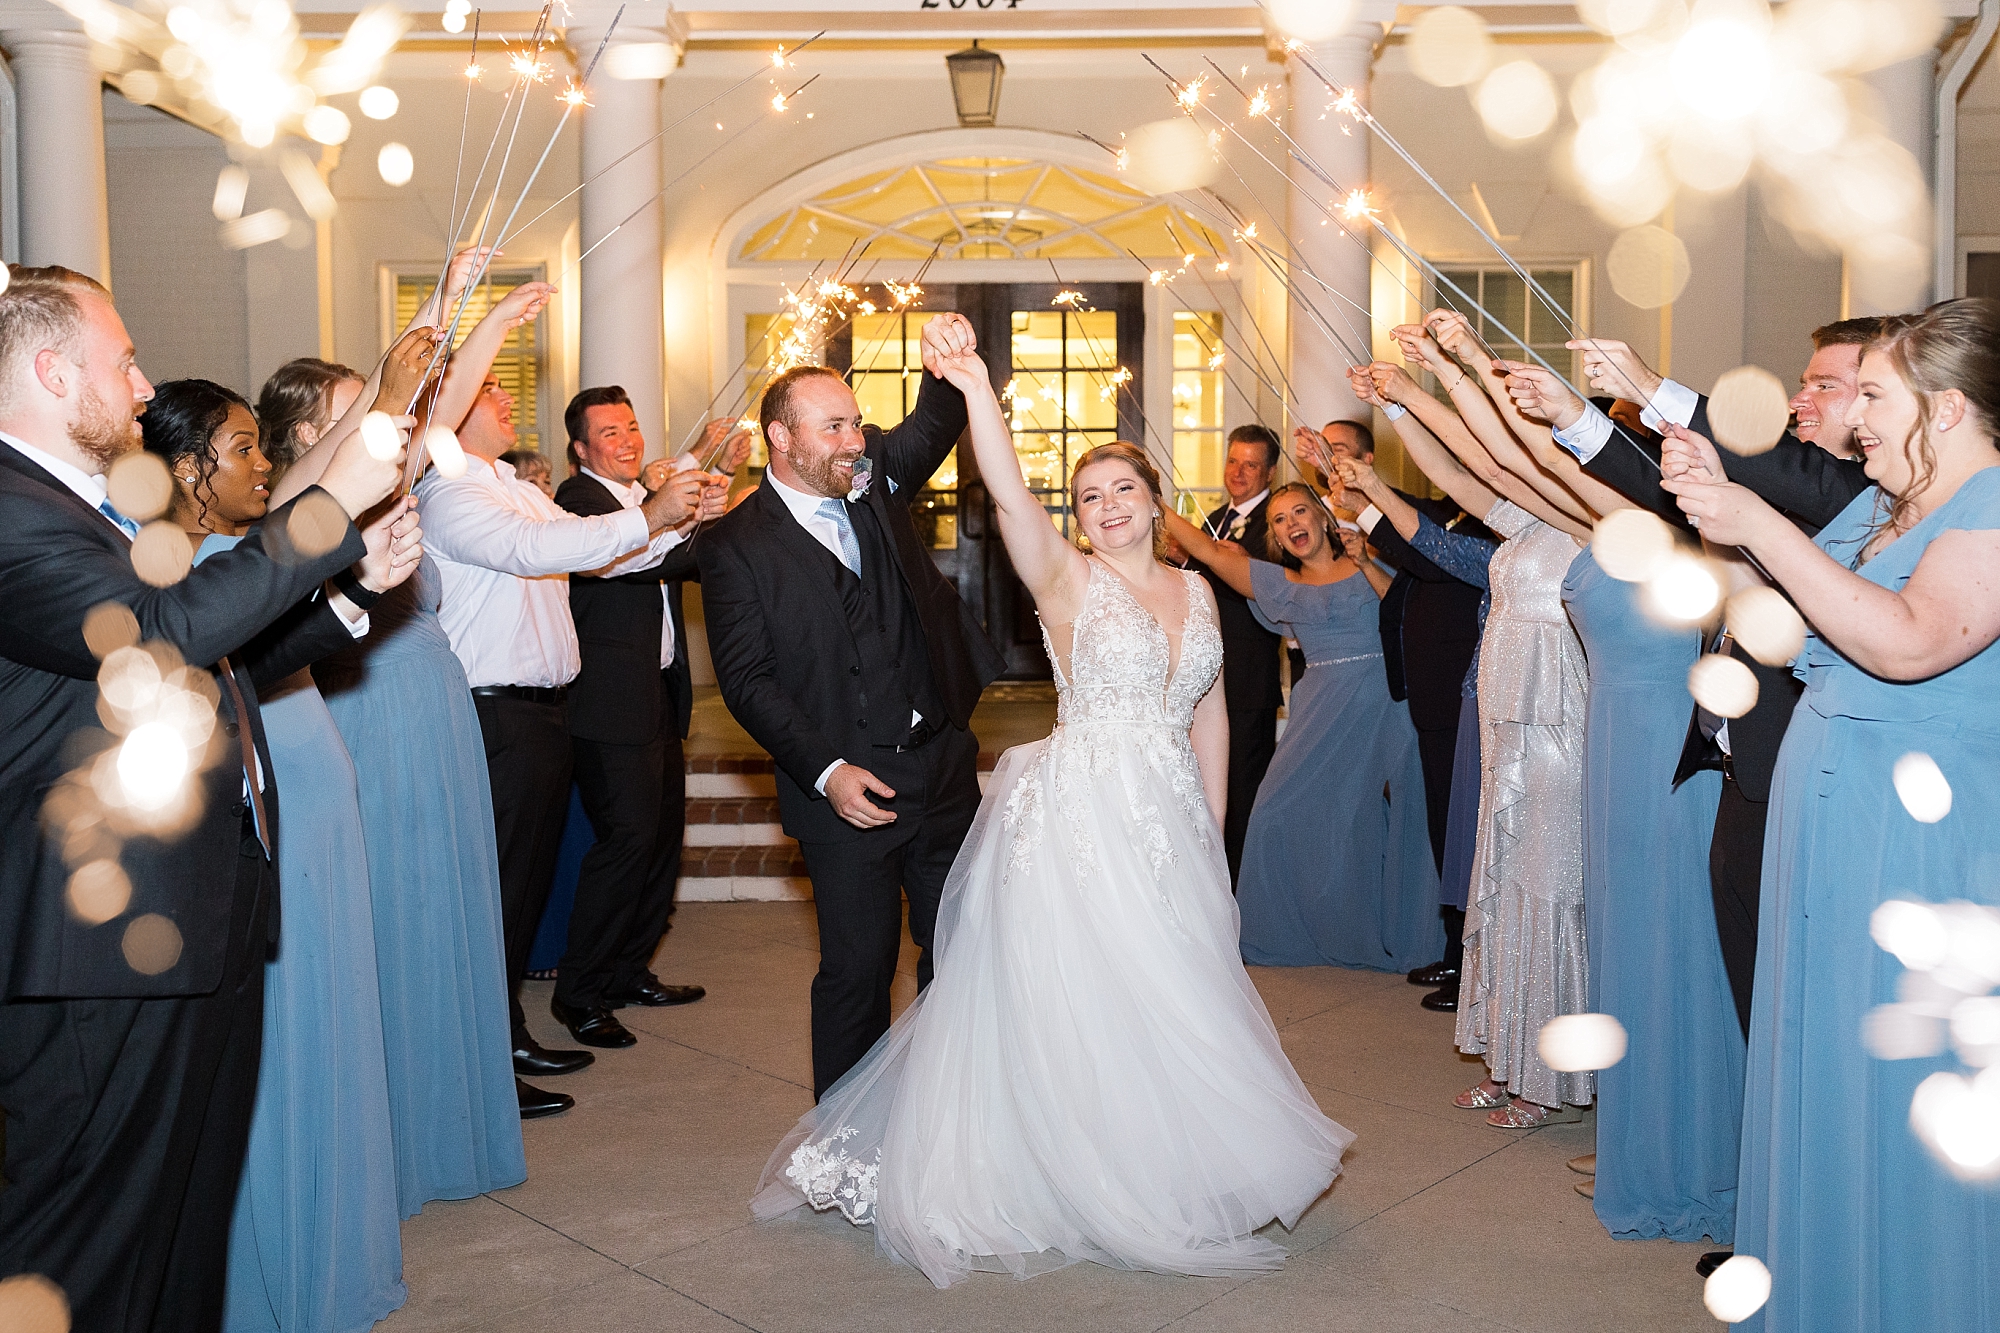 12 Oaks sparkler send off - Raleigh NC Wedding Photographer - Sarah Hinckley Photography